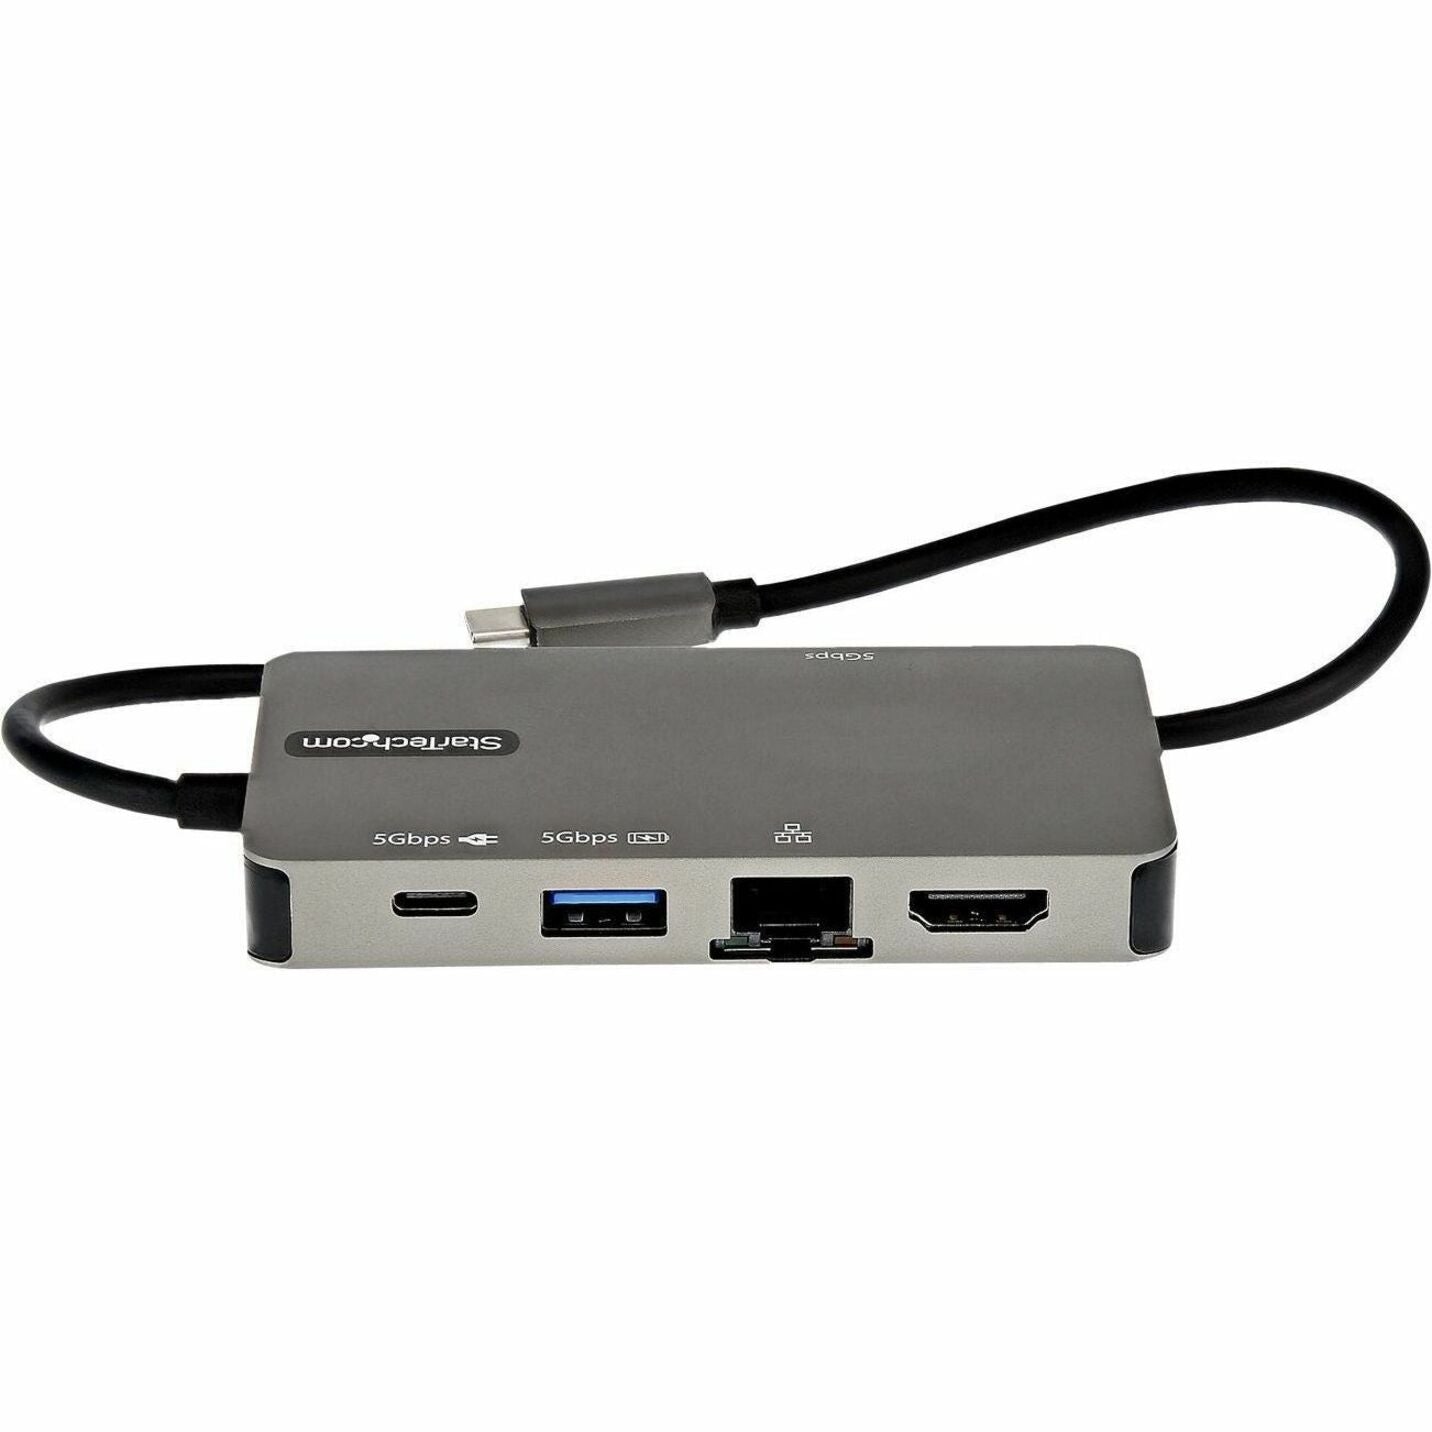 StarTech.com DKT30CHVPD2 USB-C Multiport Adapter, USB C to 4K HDMI or VGA, USB Type-C Mini Dock, 100W PD Passthrough, 3x USB 3.0, GbE